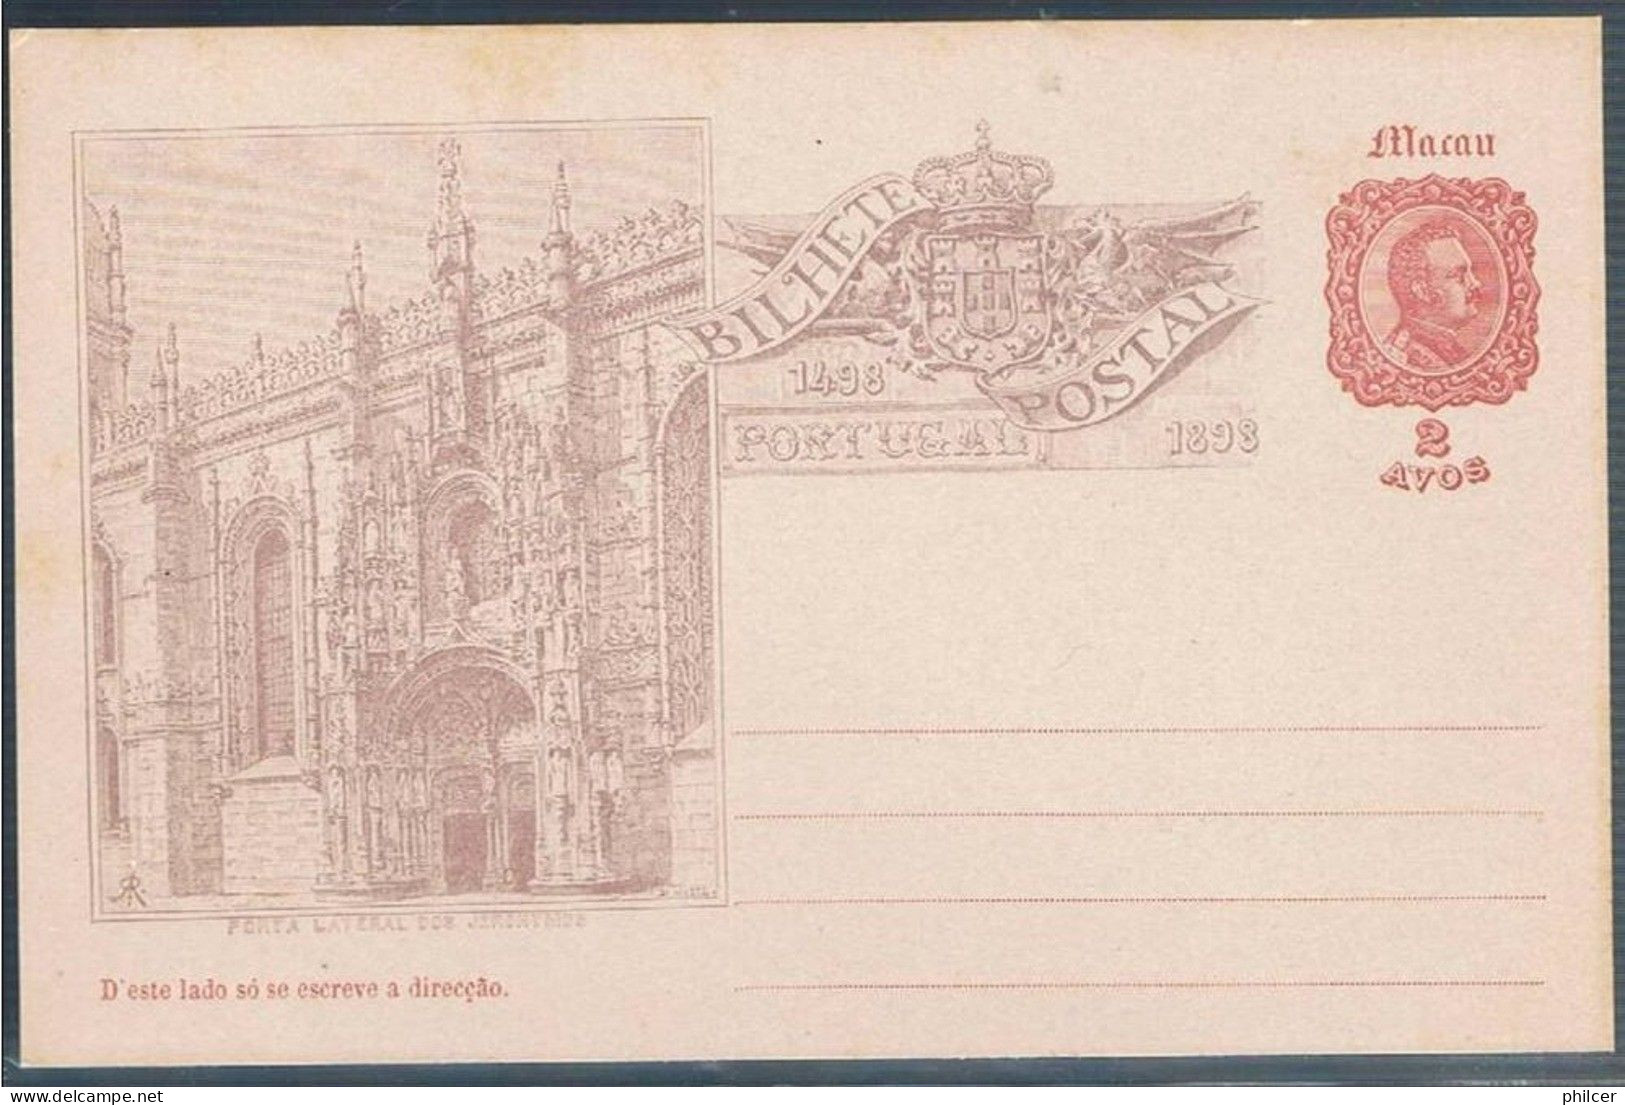 Macau, Bilhete Postal Porta Lateral Dos Jeronymos - Covers & Documents